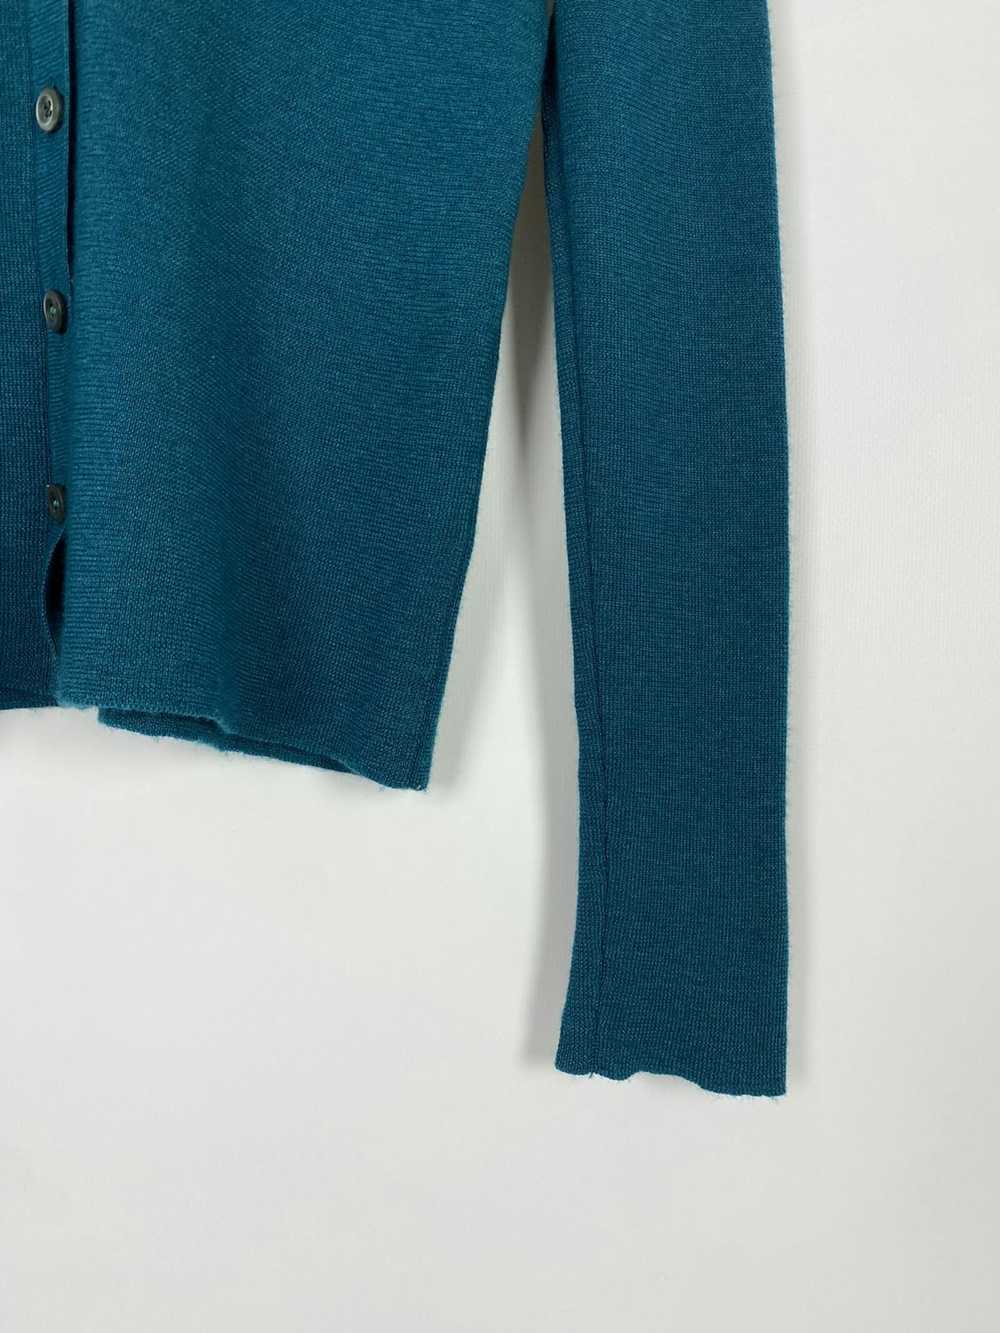 Luxury × Prada Prada Milano Wool Cardigan Sweater - image 5